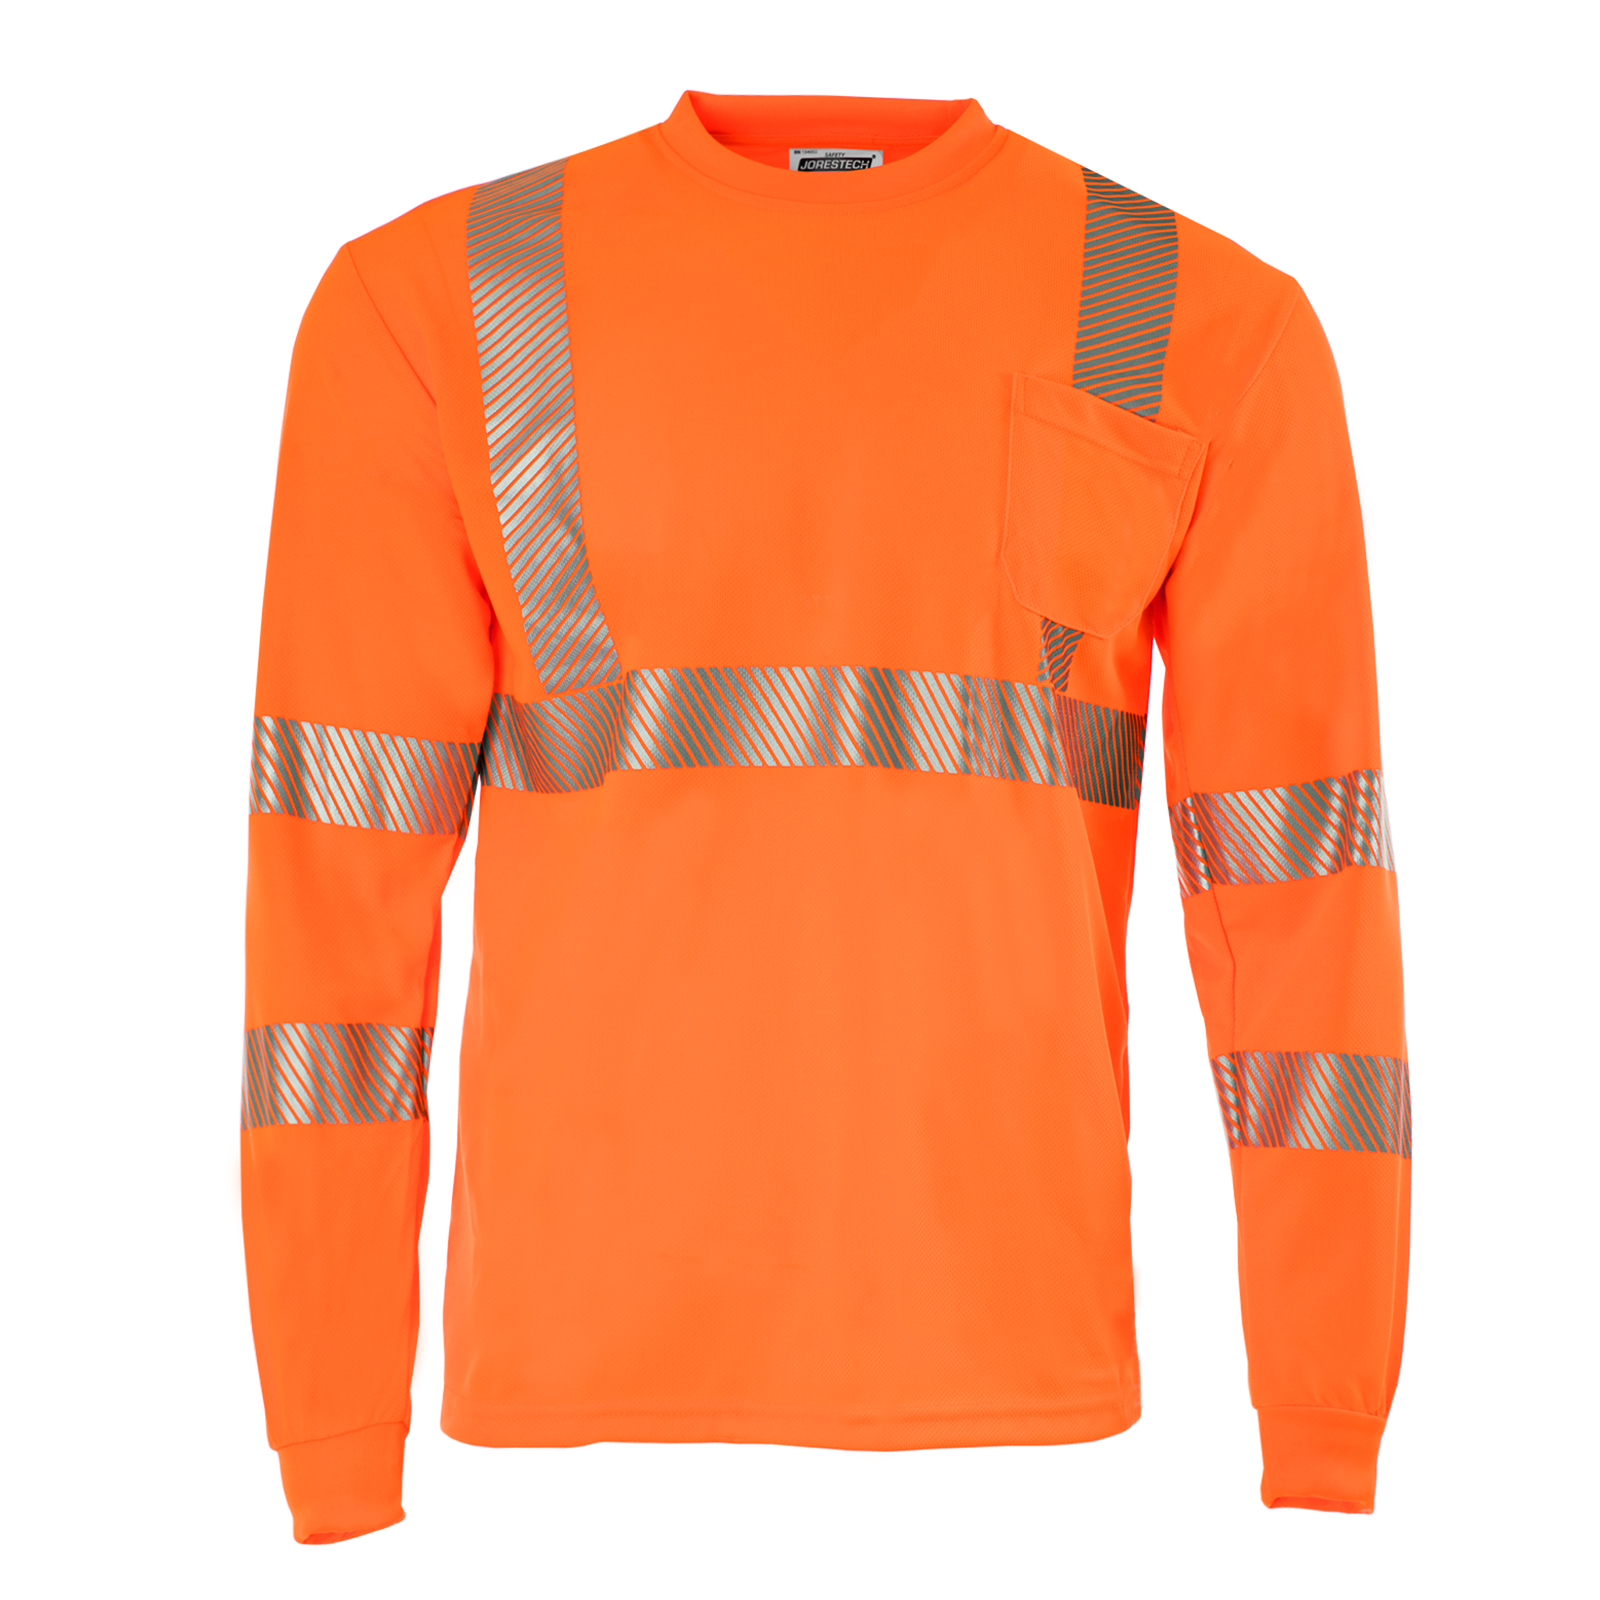 Front view of the JORESTECH Hi-Vis orange heat transfer reflective long sleeve safety pocket breathable shirt